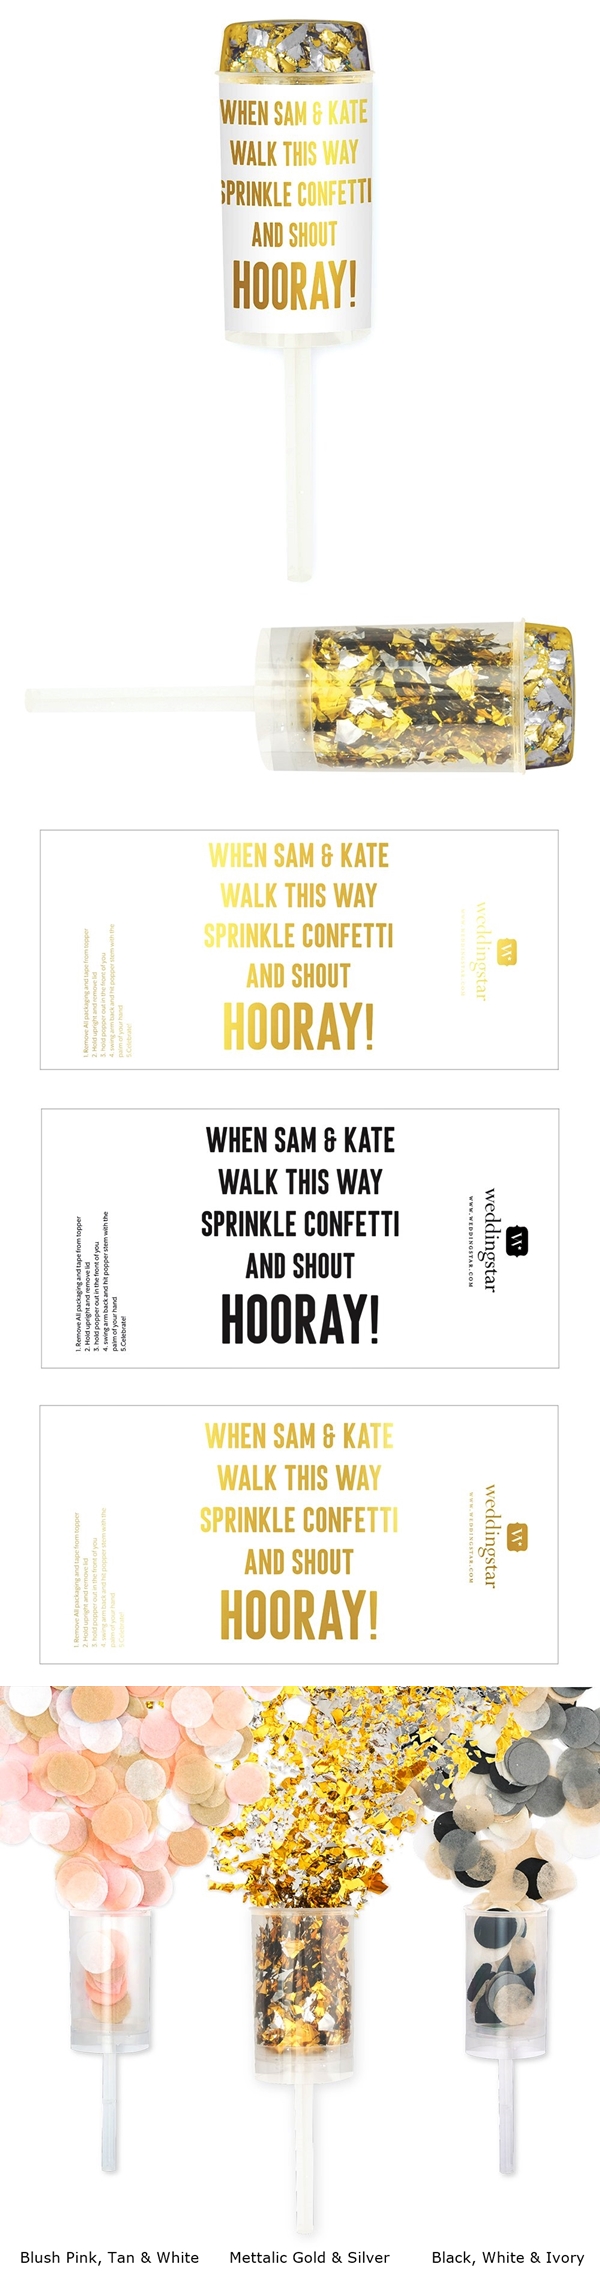 Weddingstar Personalized Push-Up Confetti Popper - Custom Text